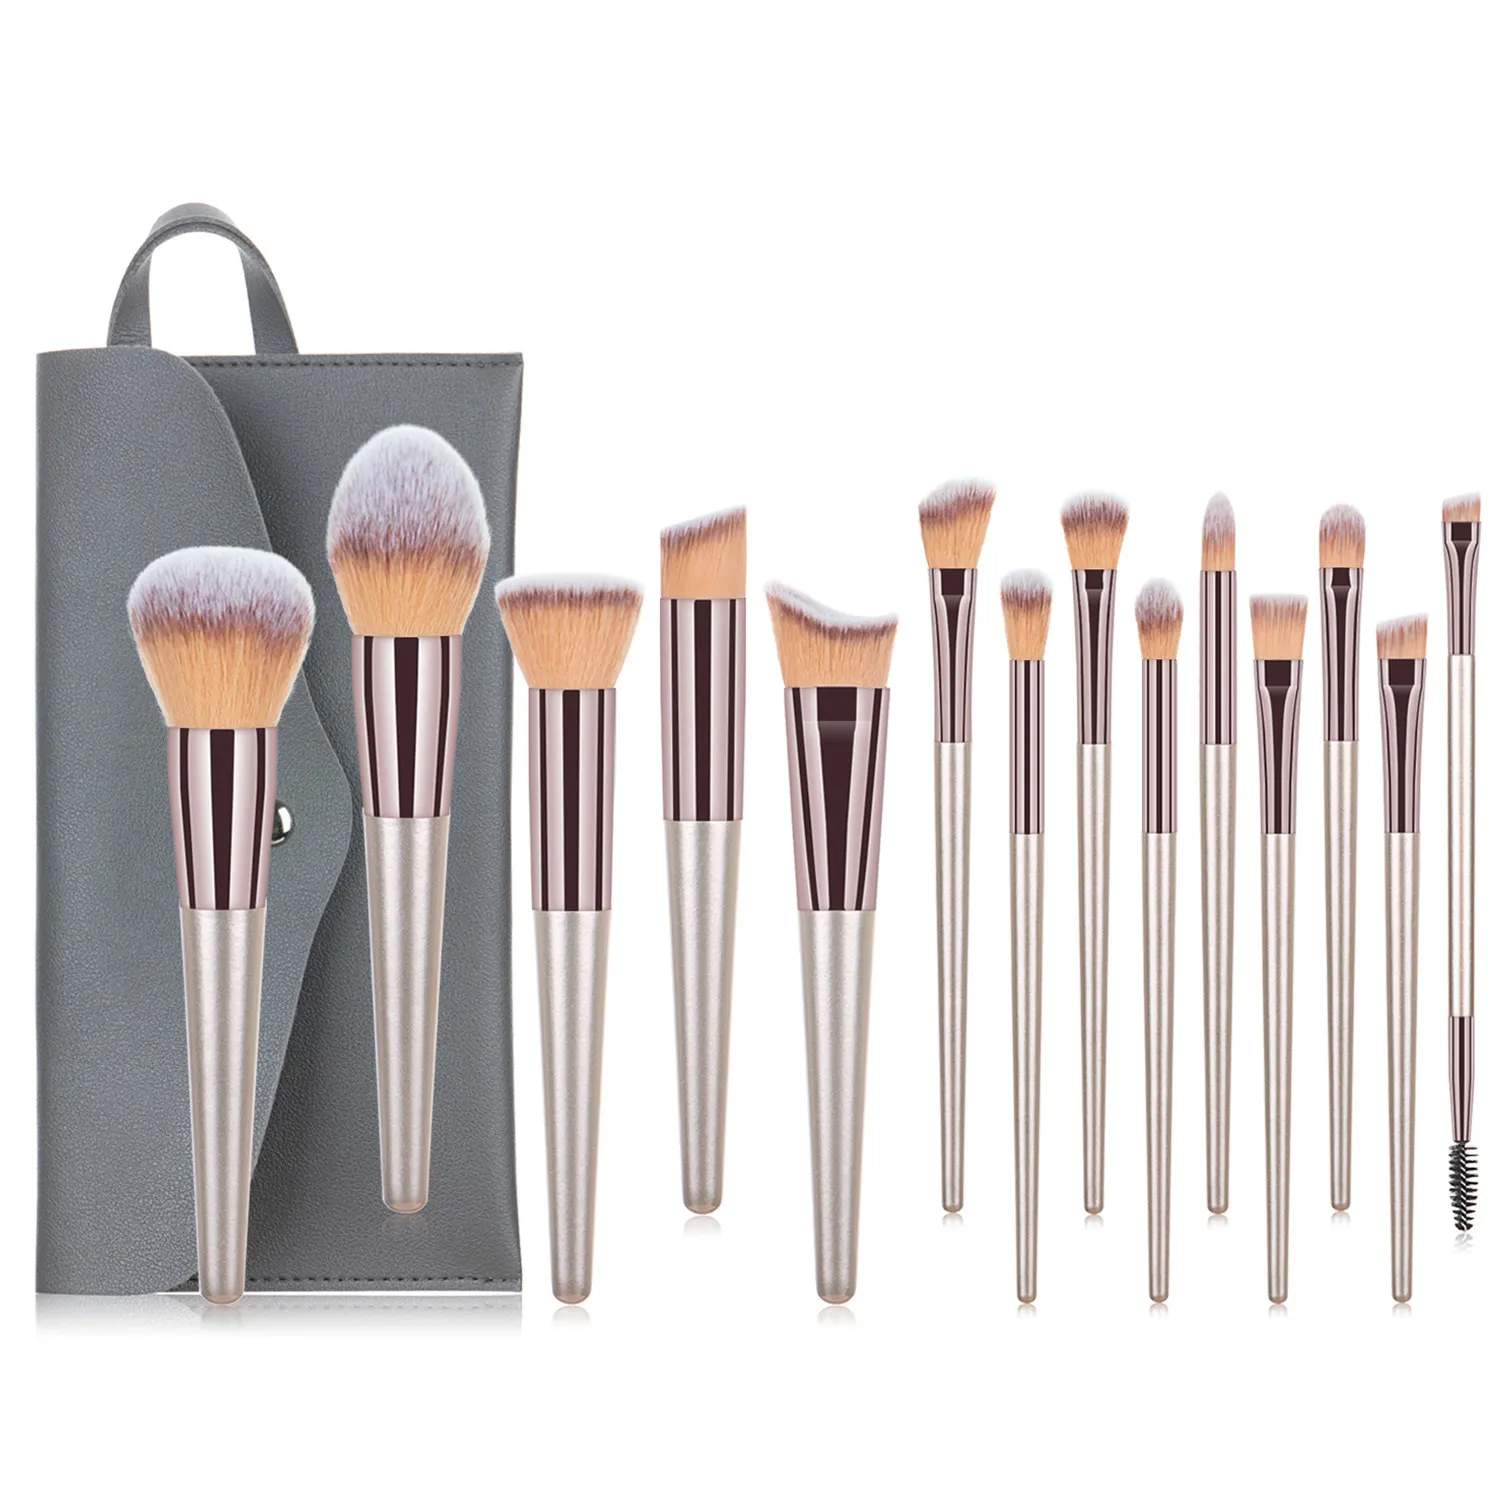 10pcs/14pcs Champagne gold makeup brushes set for cosmetic foundation powder eye shadow kabuki make up brush beauty tool